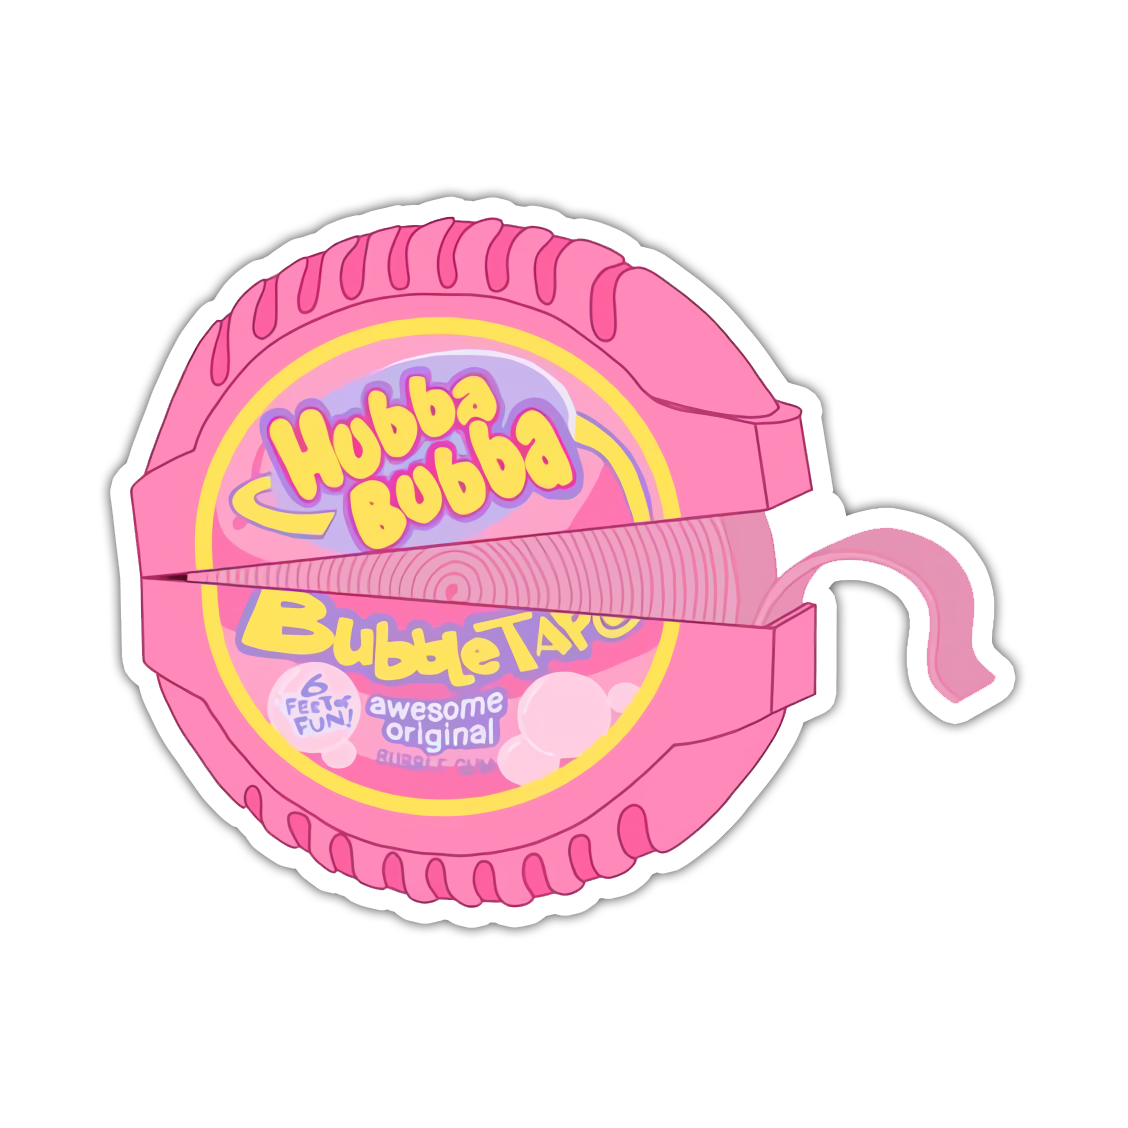 Hubba Bubba Bubble Tape Die Cut Sticker (4909)